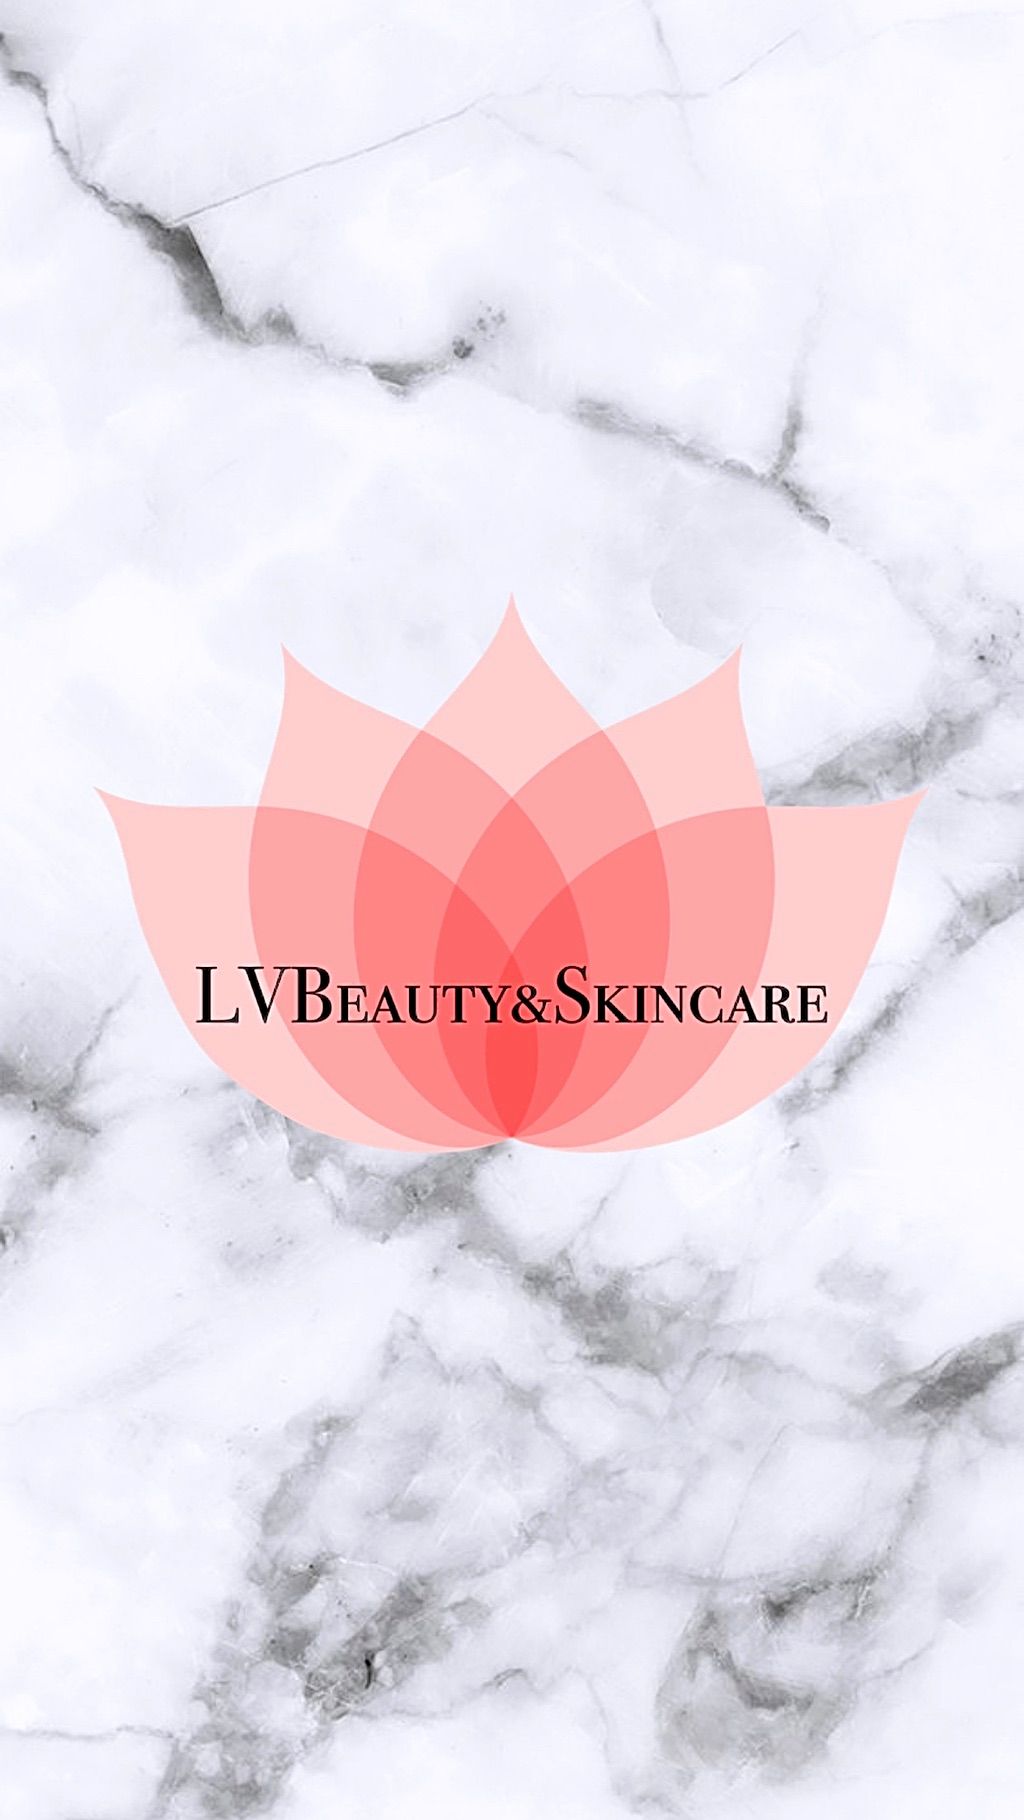 LVBeauty&Skincare